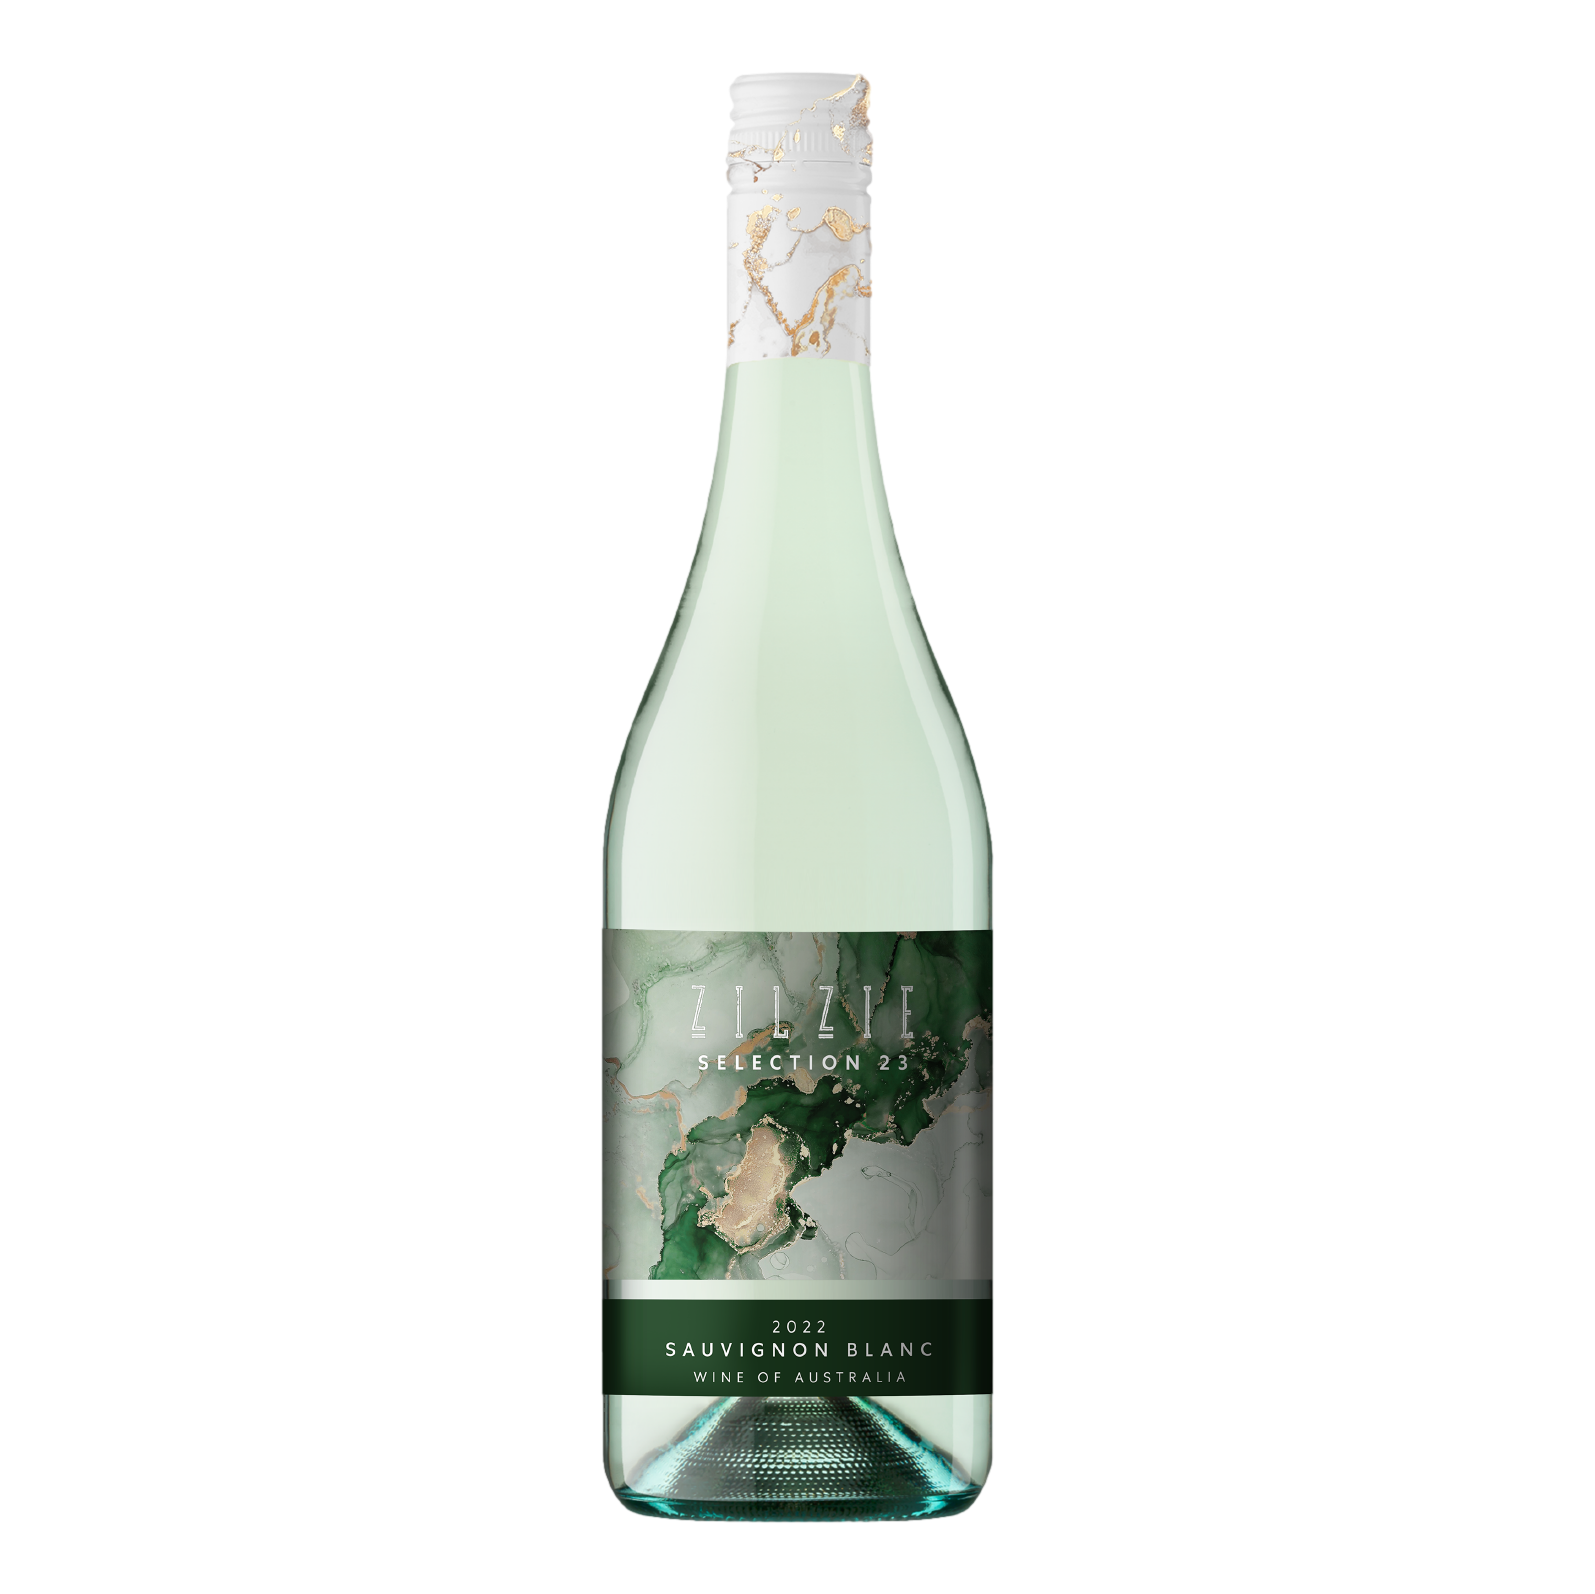 Zilzie Selection 23 Sauvignon Blanc